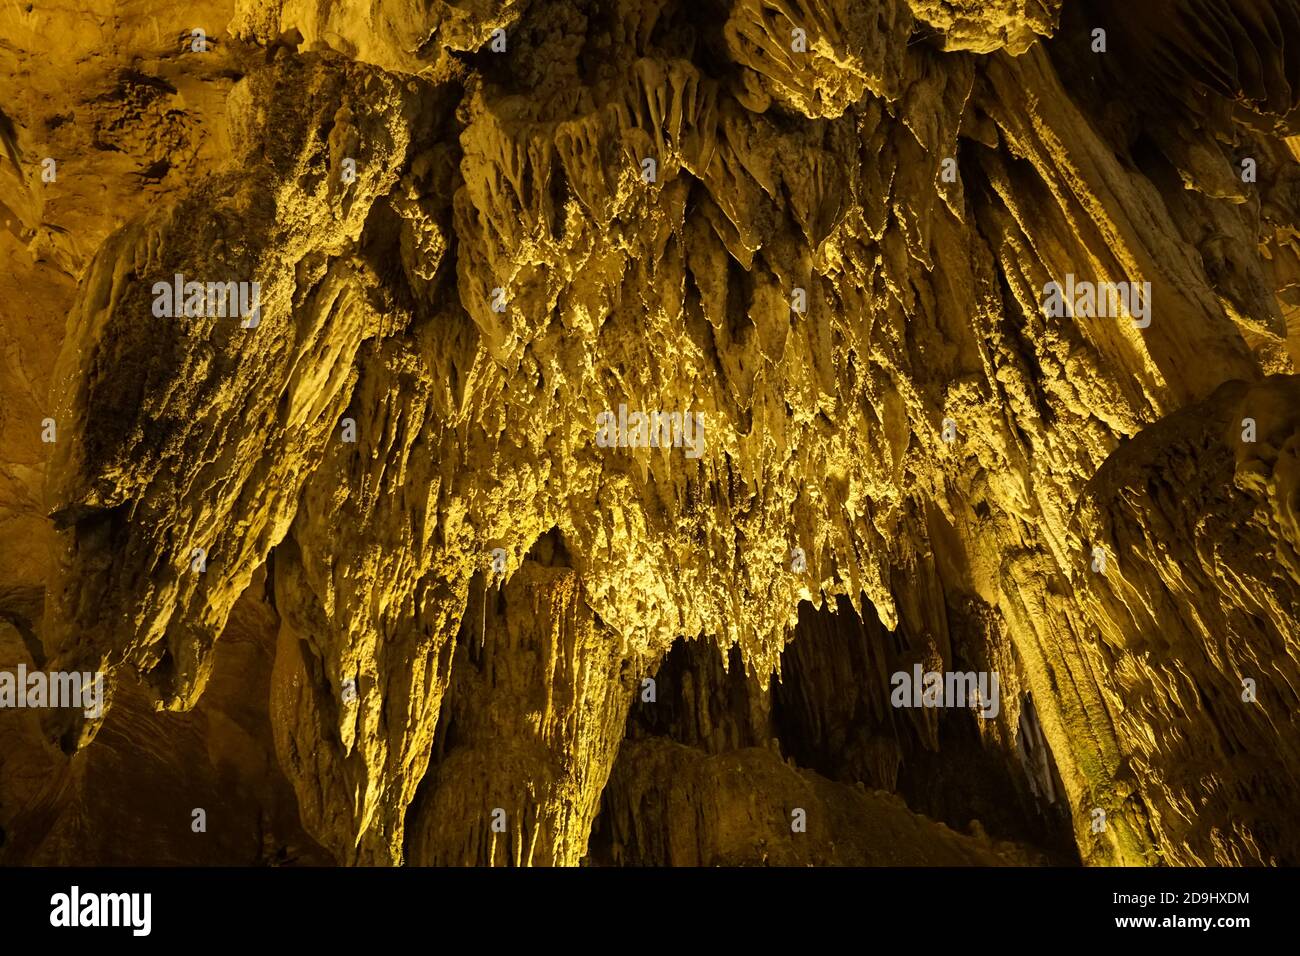 stalactites in limestone cave, Ipoh, Malaysia Stock Photo